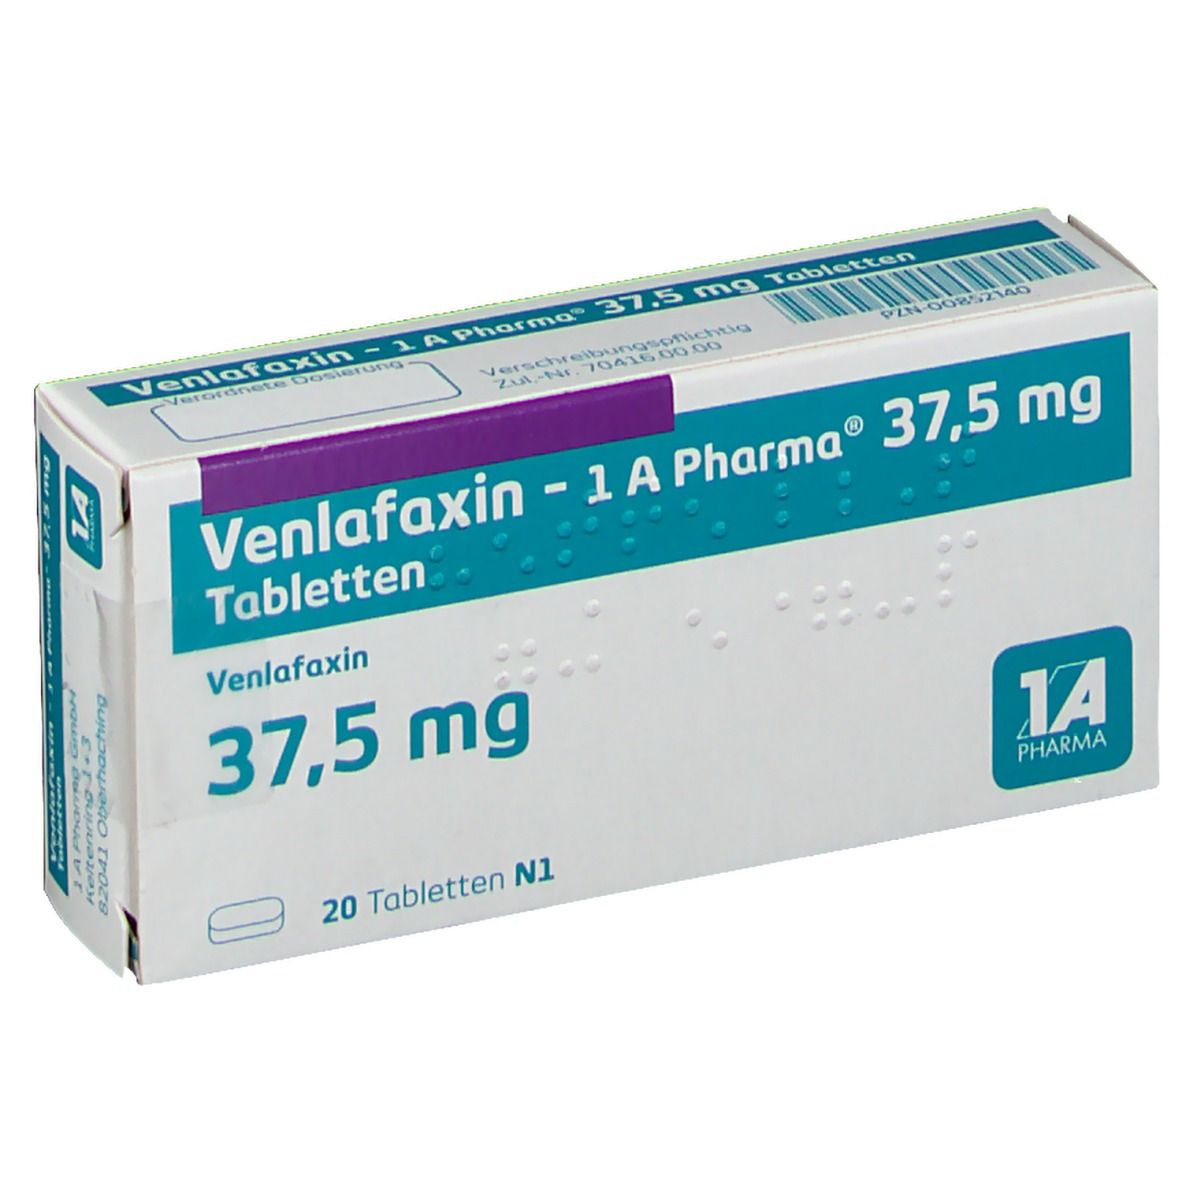 Venlafaxin - 1 A Pharma® 37,5 mg